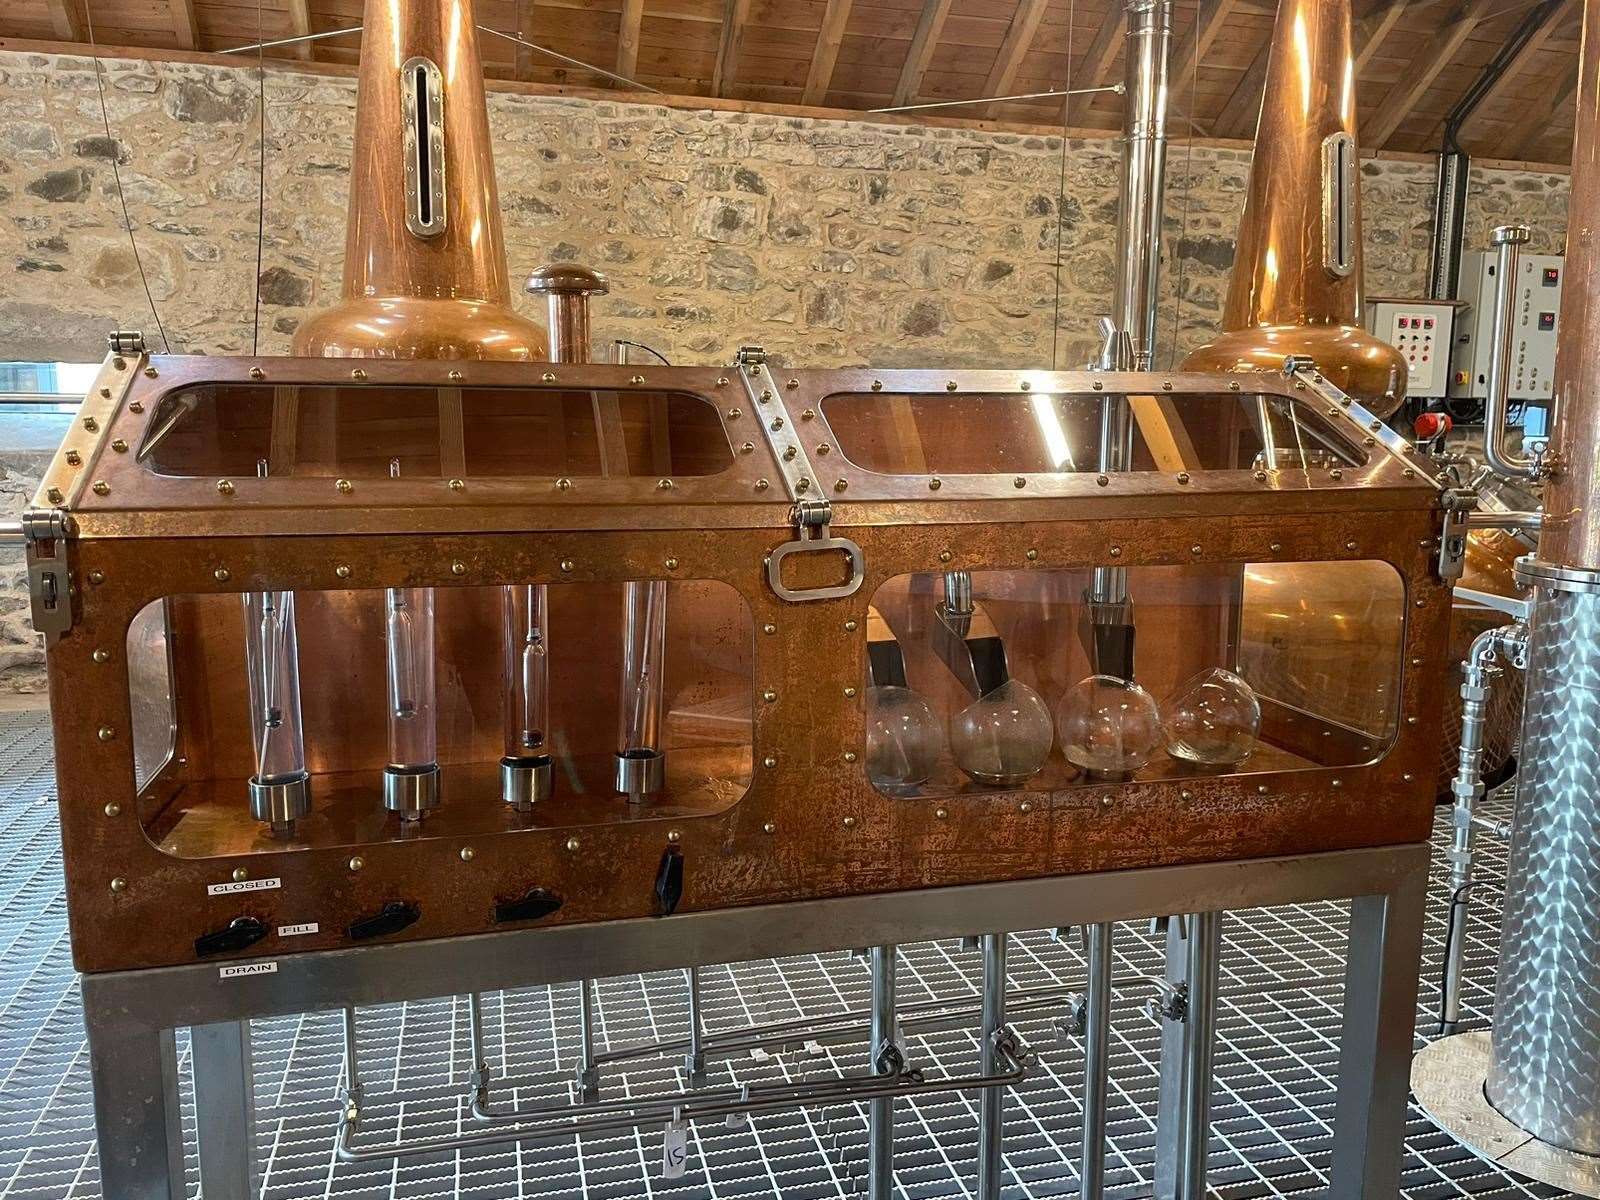 The distillery spirit safe.